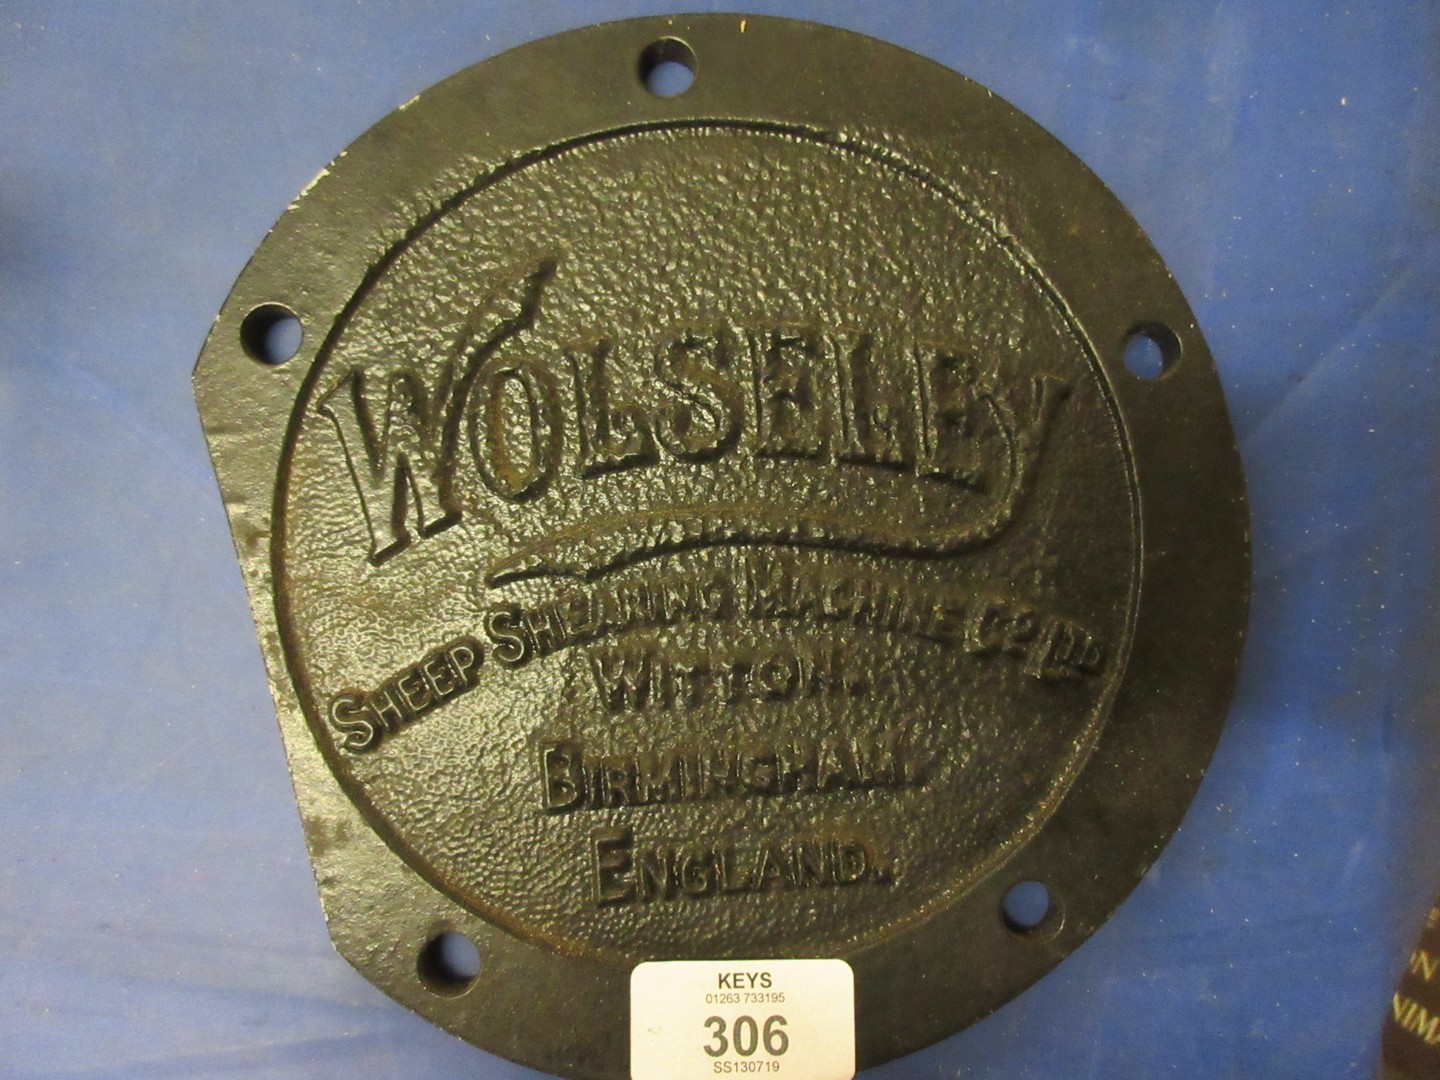 Wolesley machine plaque